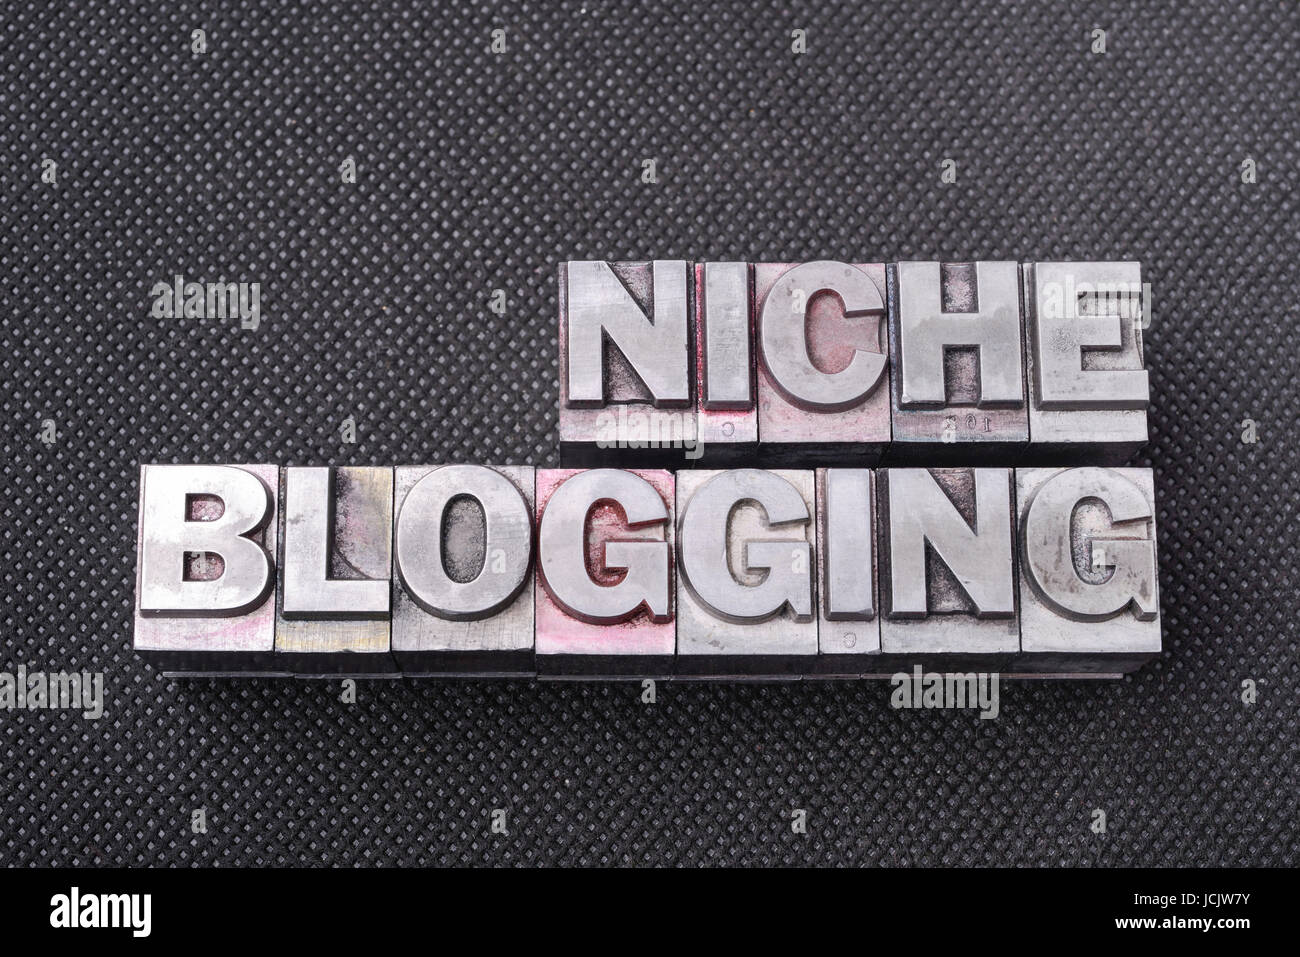 Blogs de nicho frase hecha de bloques de tipografía metálica negra sobre la superficie perforada Foto de stock